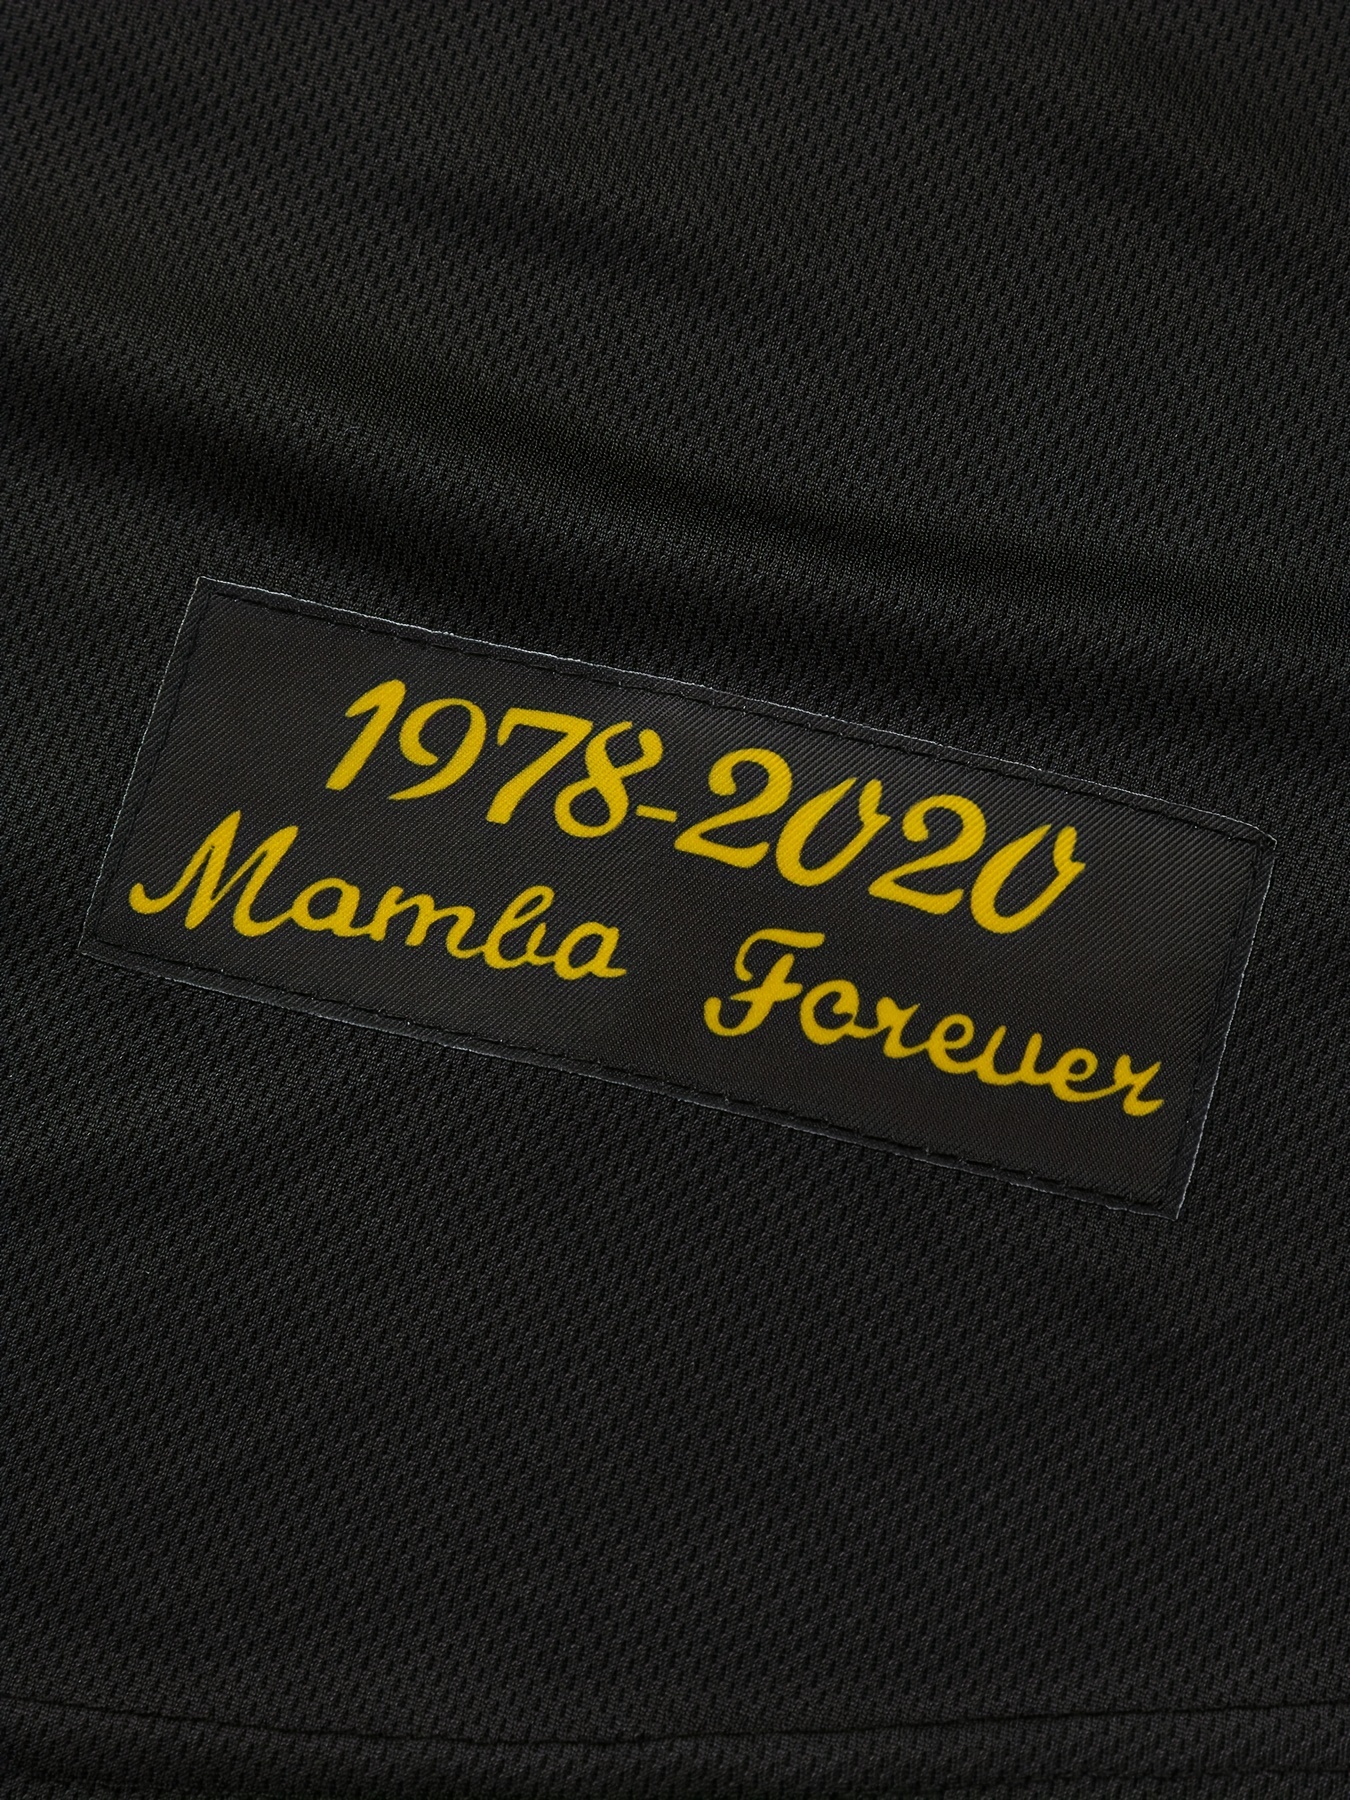 Men's #8 24 Legend Baseball Jersey, Classic Design Button Up Short Sleeve Baseball Shirt for Training Competition,Temu